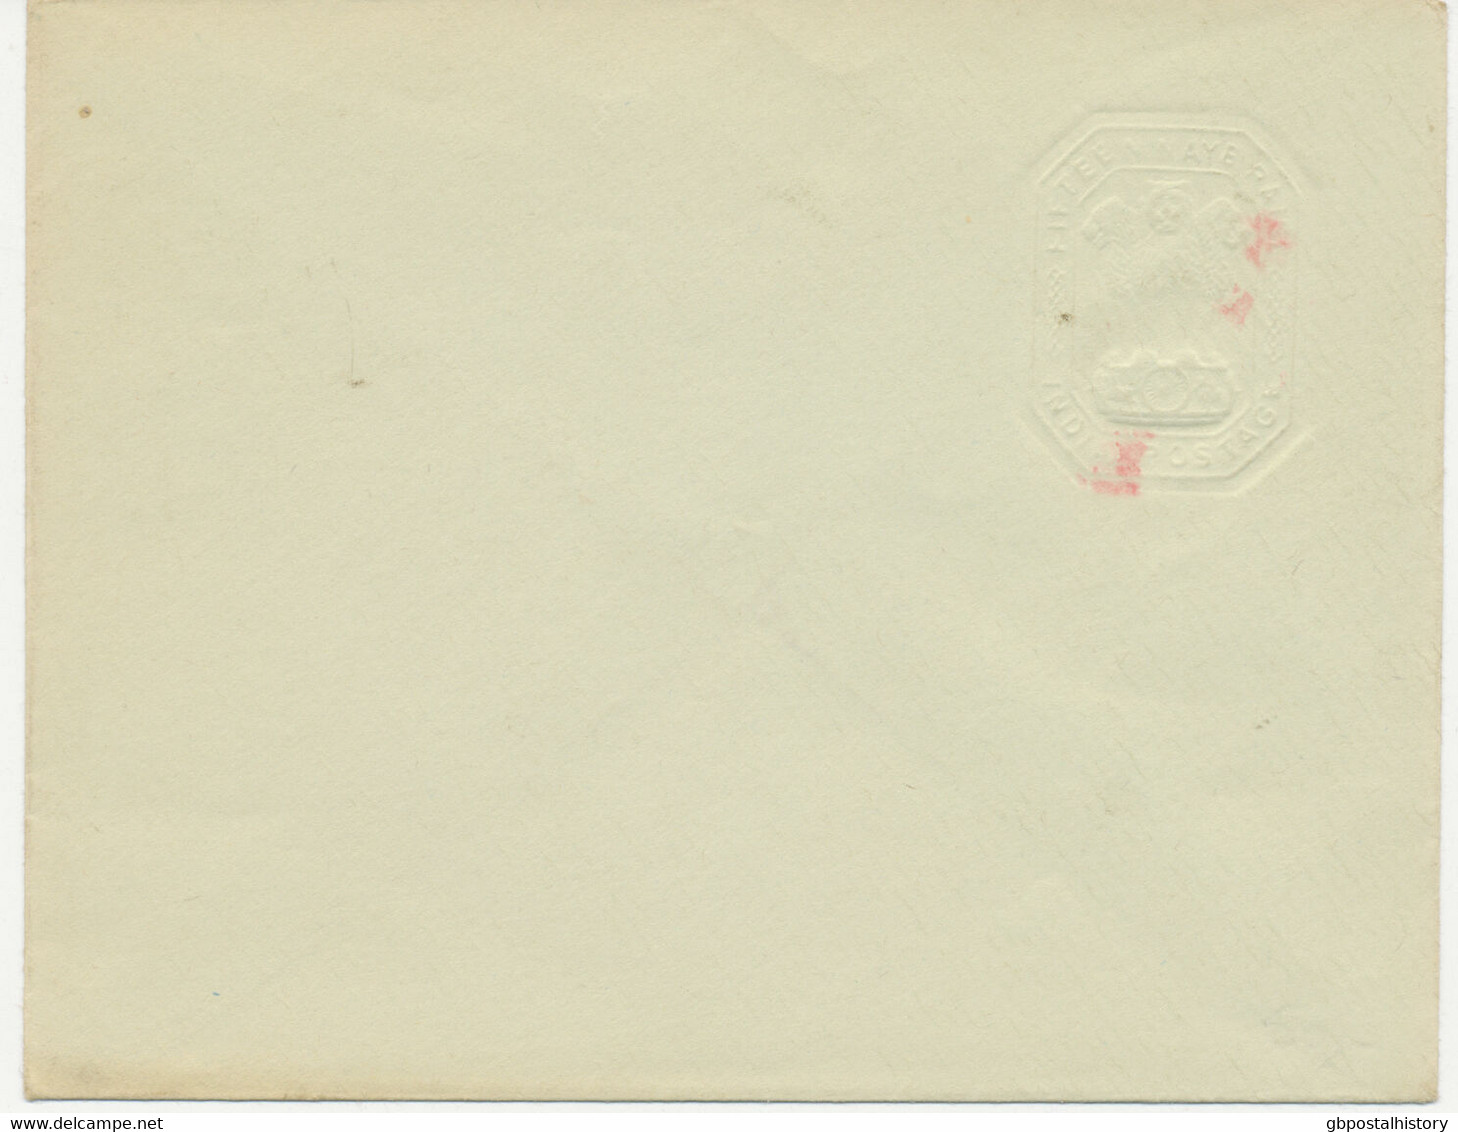 INDIA 195? 15 N.P. Red U/M Postal Stationery Env MISSING RED COLOUR 98% - Errors, Freaks & Oddities (EFO)